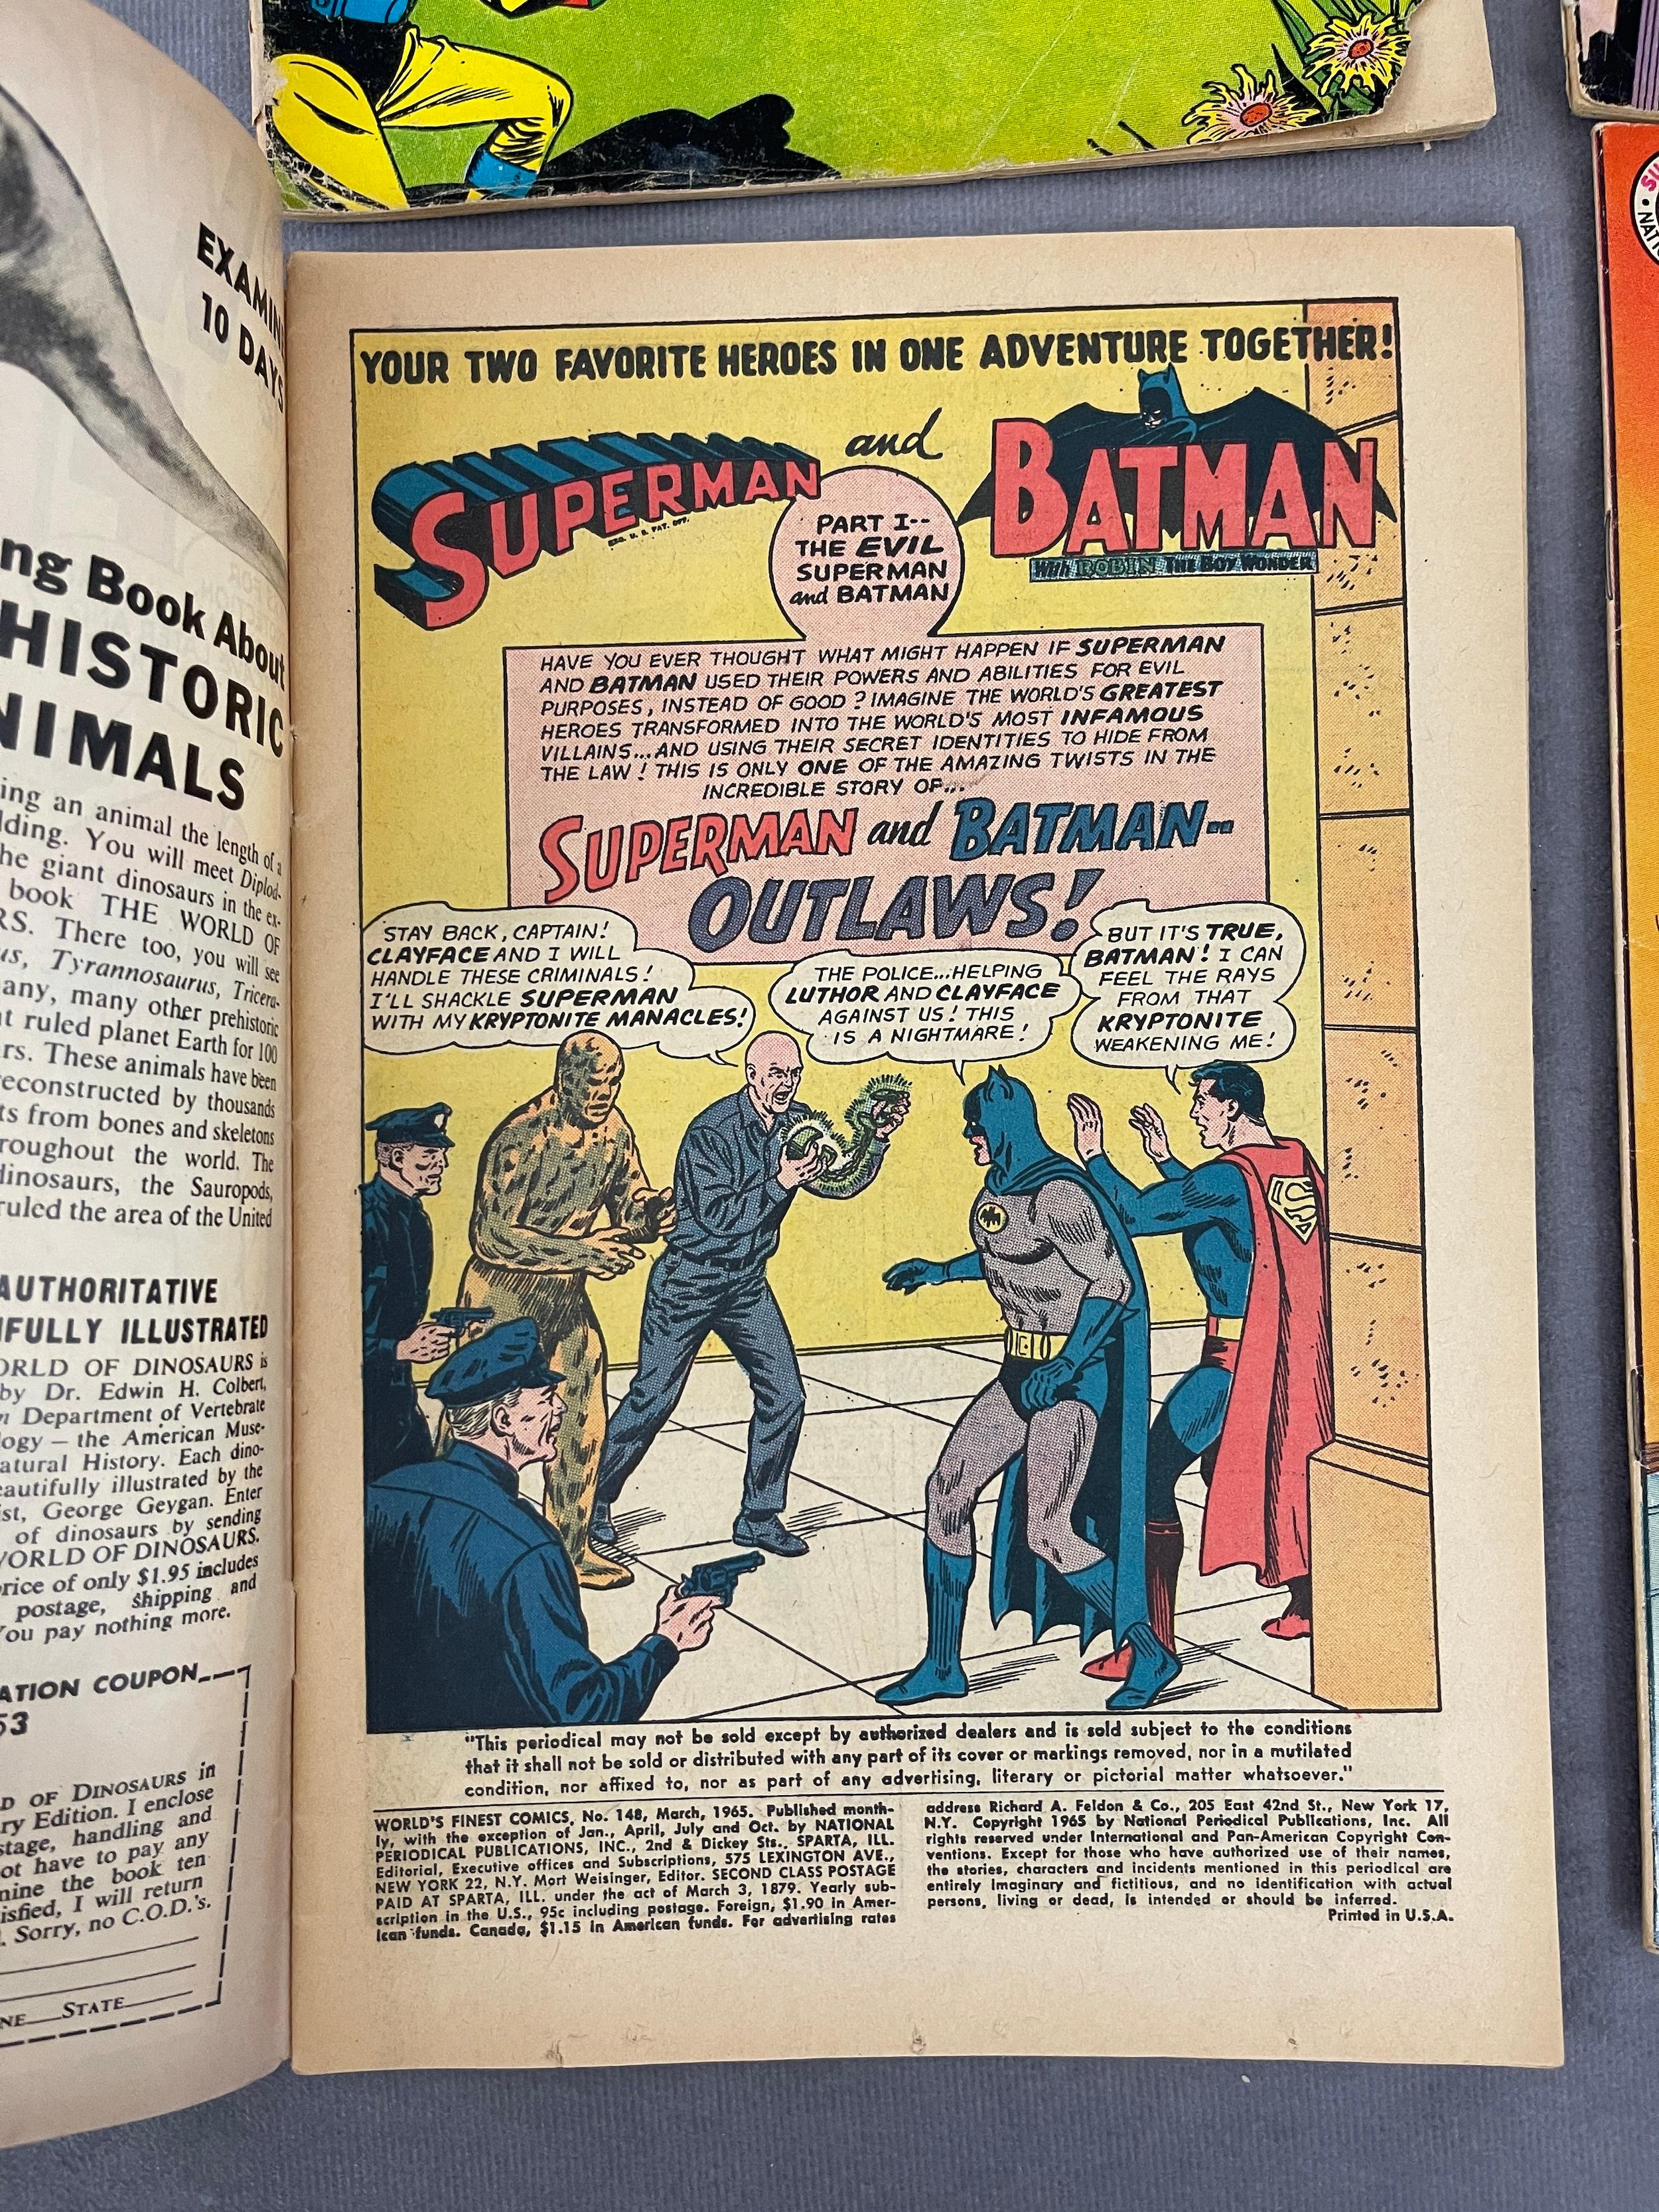 World's Finest Vintage DC Comic Books